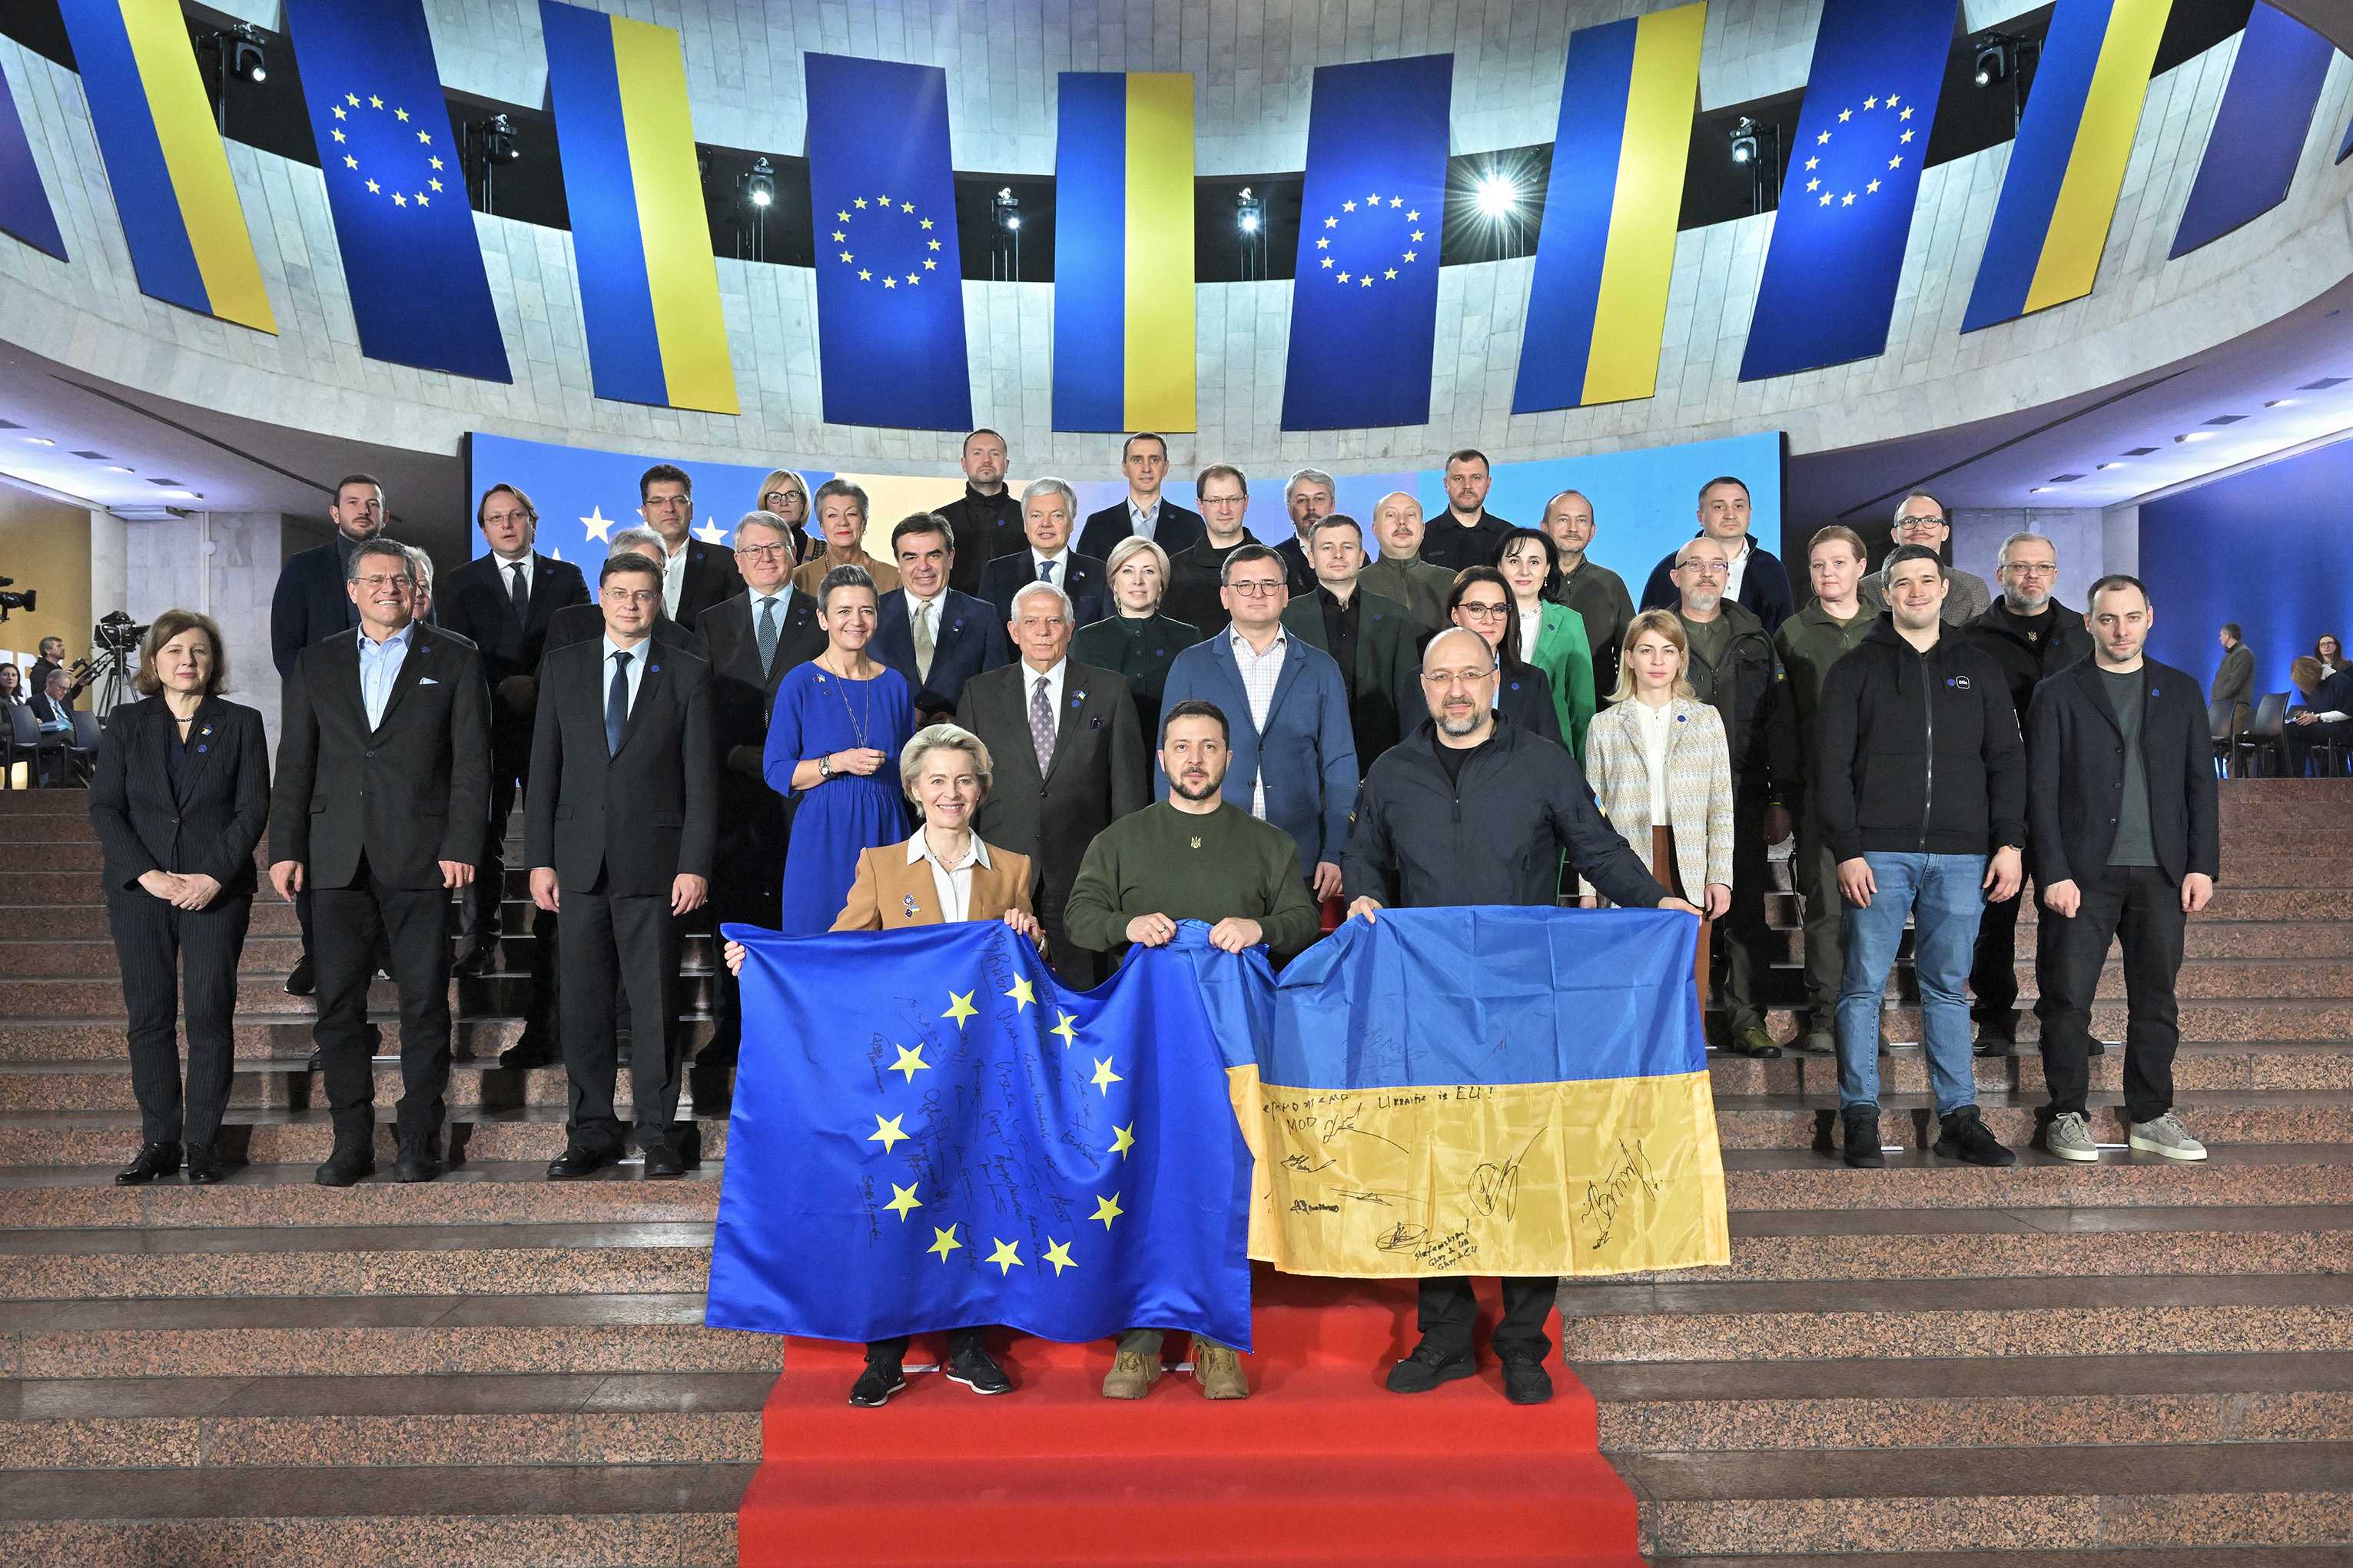 The EU Academy is part of EU’s support to Ukraine